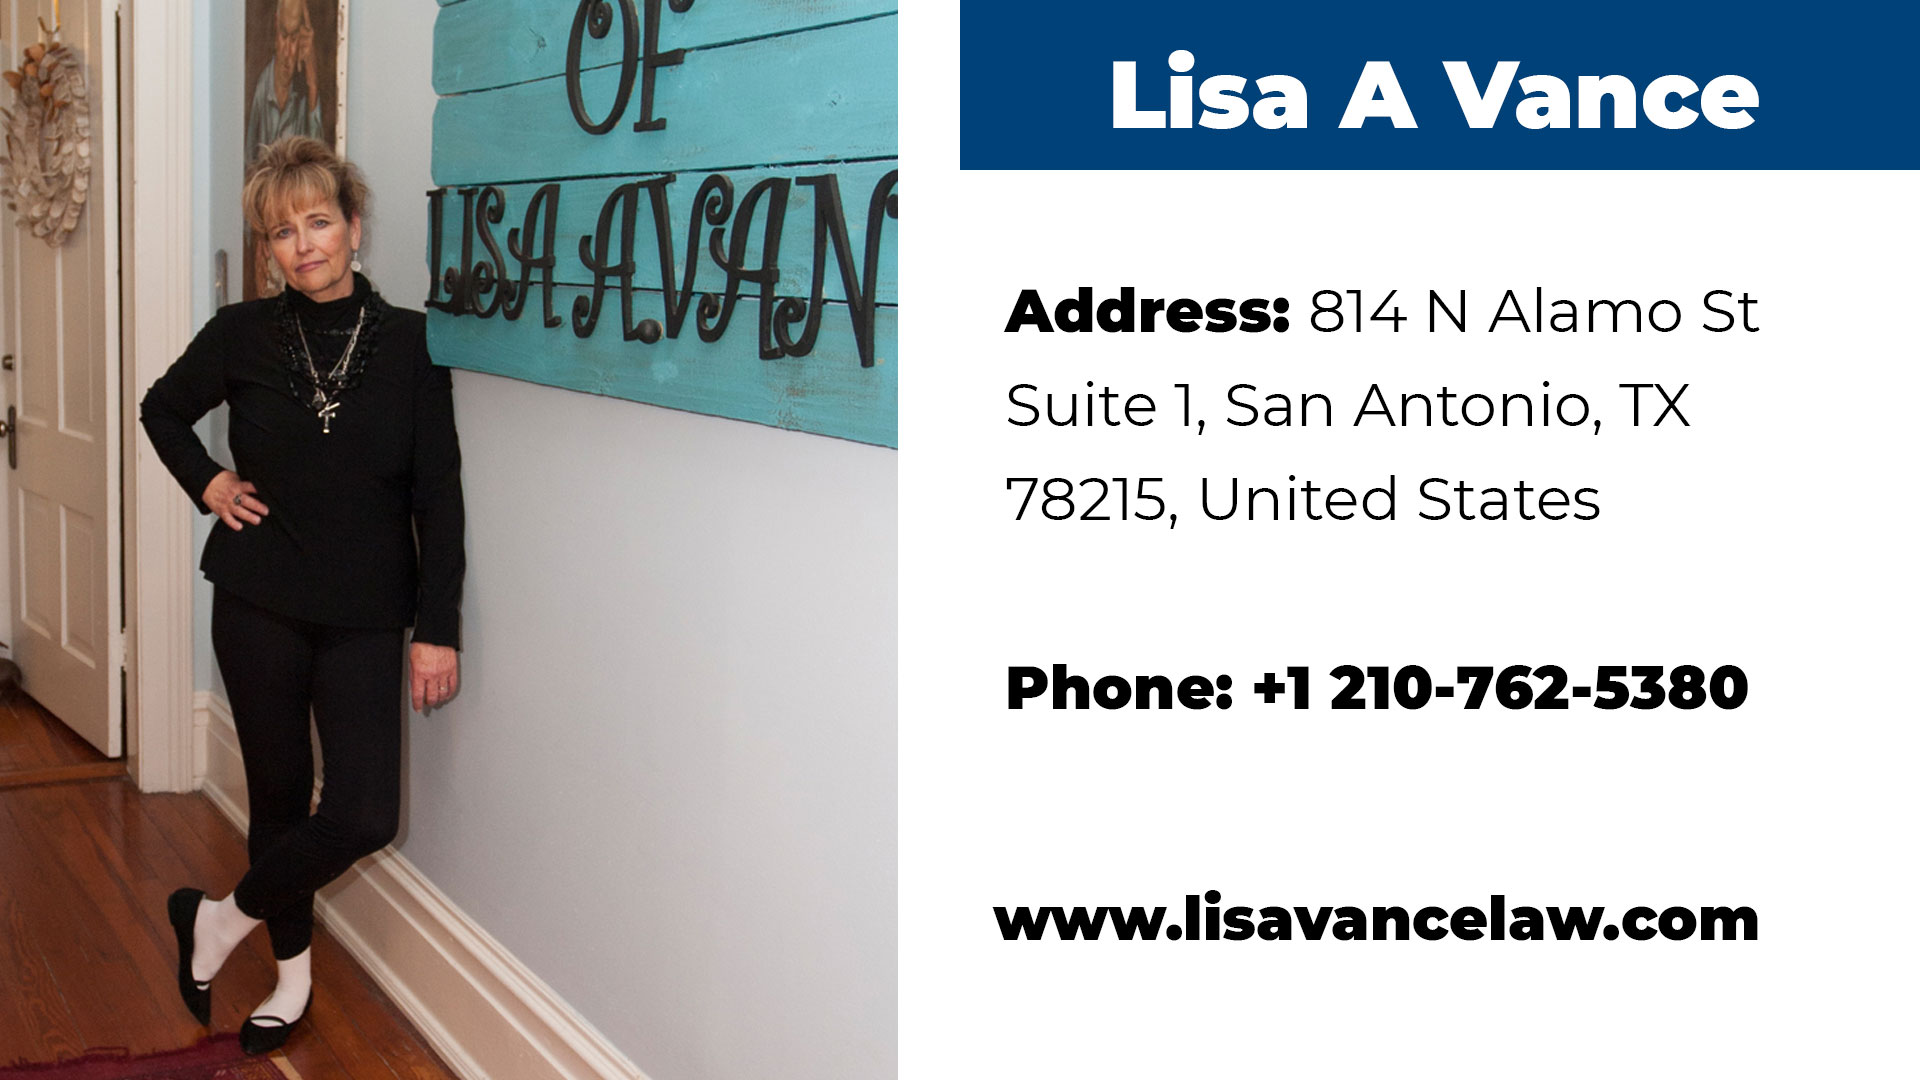 Lisa A Vance lawyer in san antonio